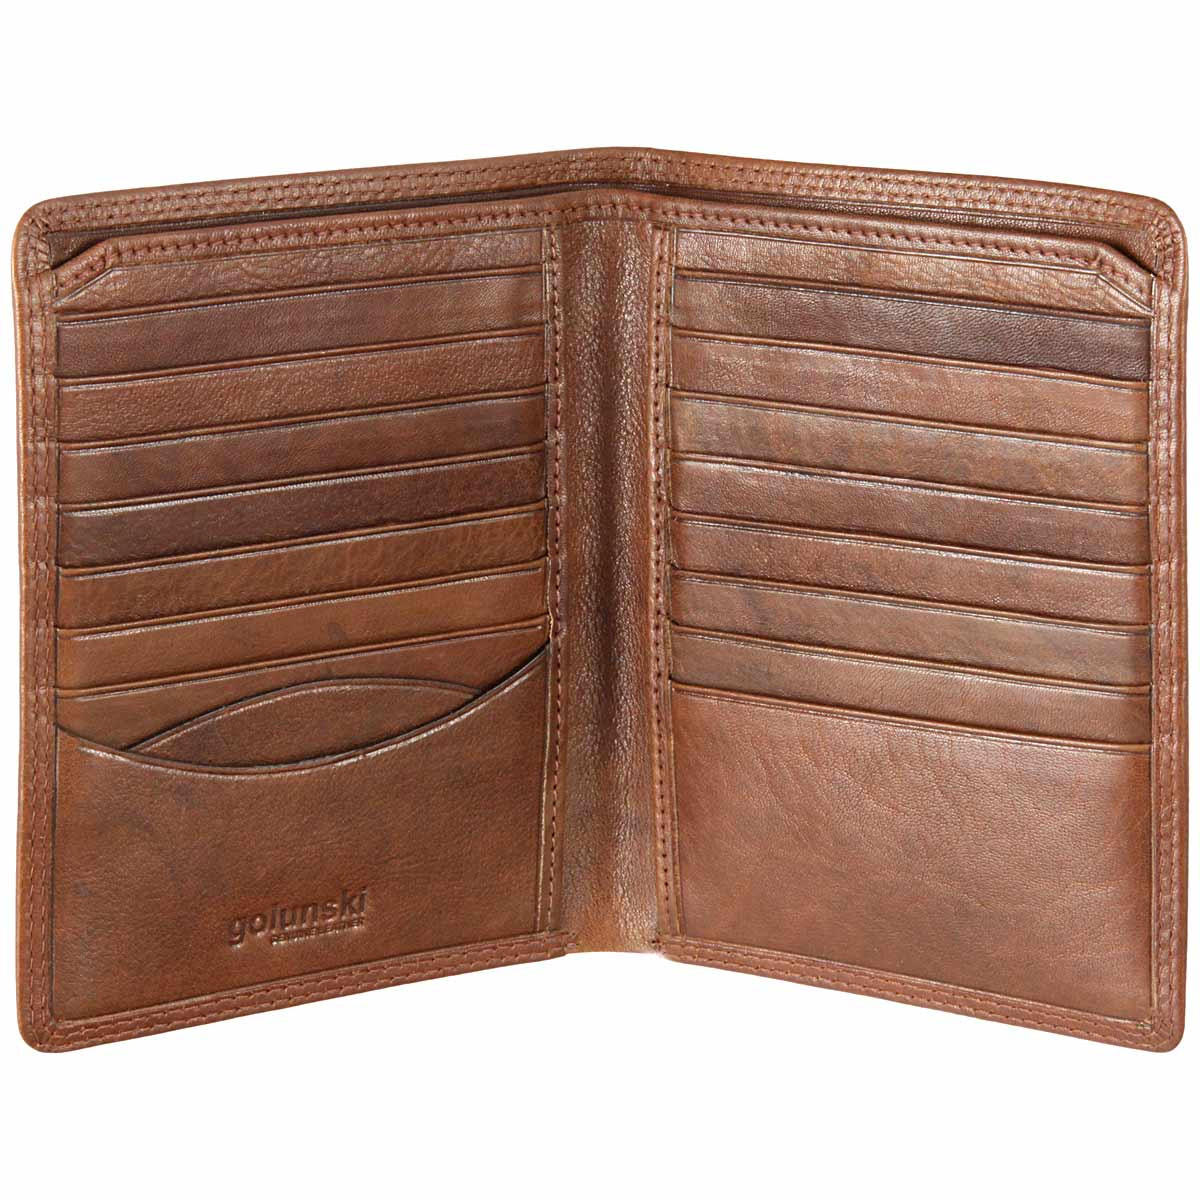 Golunski Oak Slim Soft Leather Men's Wallet 7-711 Tan